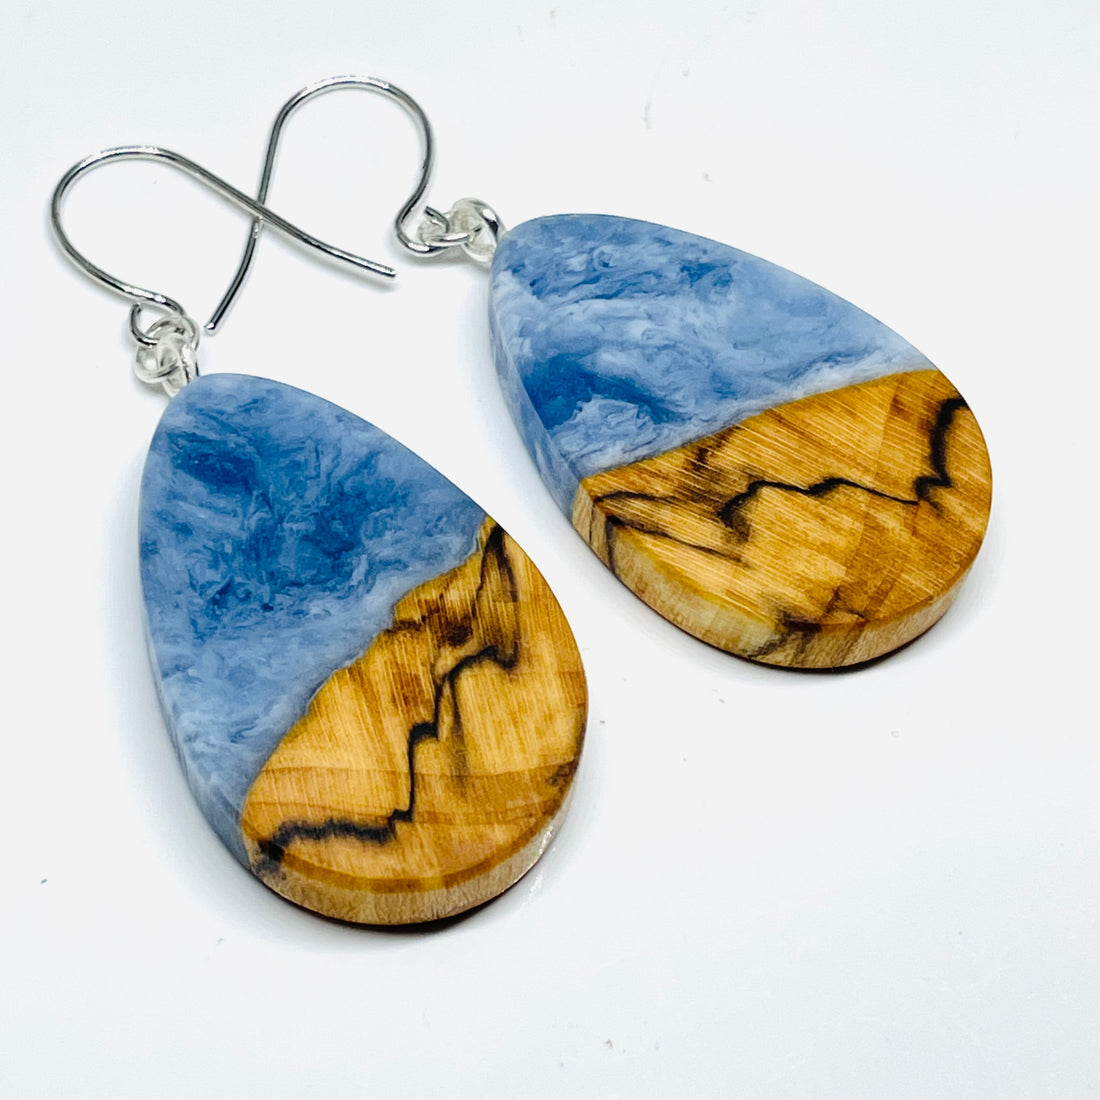 handmade jewelry, Minnesota local wood and resin artist. Ocean waves blue with spalted maple wood, nickel free dangle hook earrings.